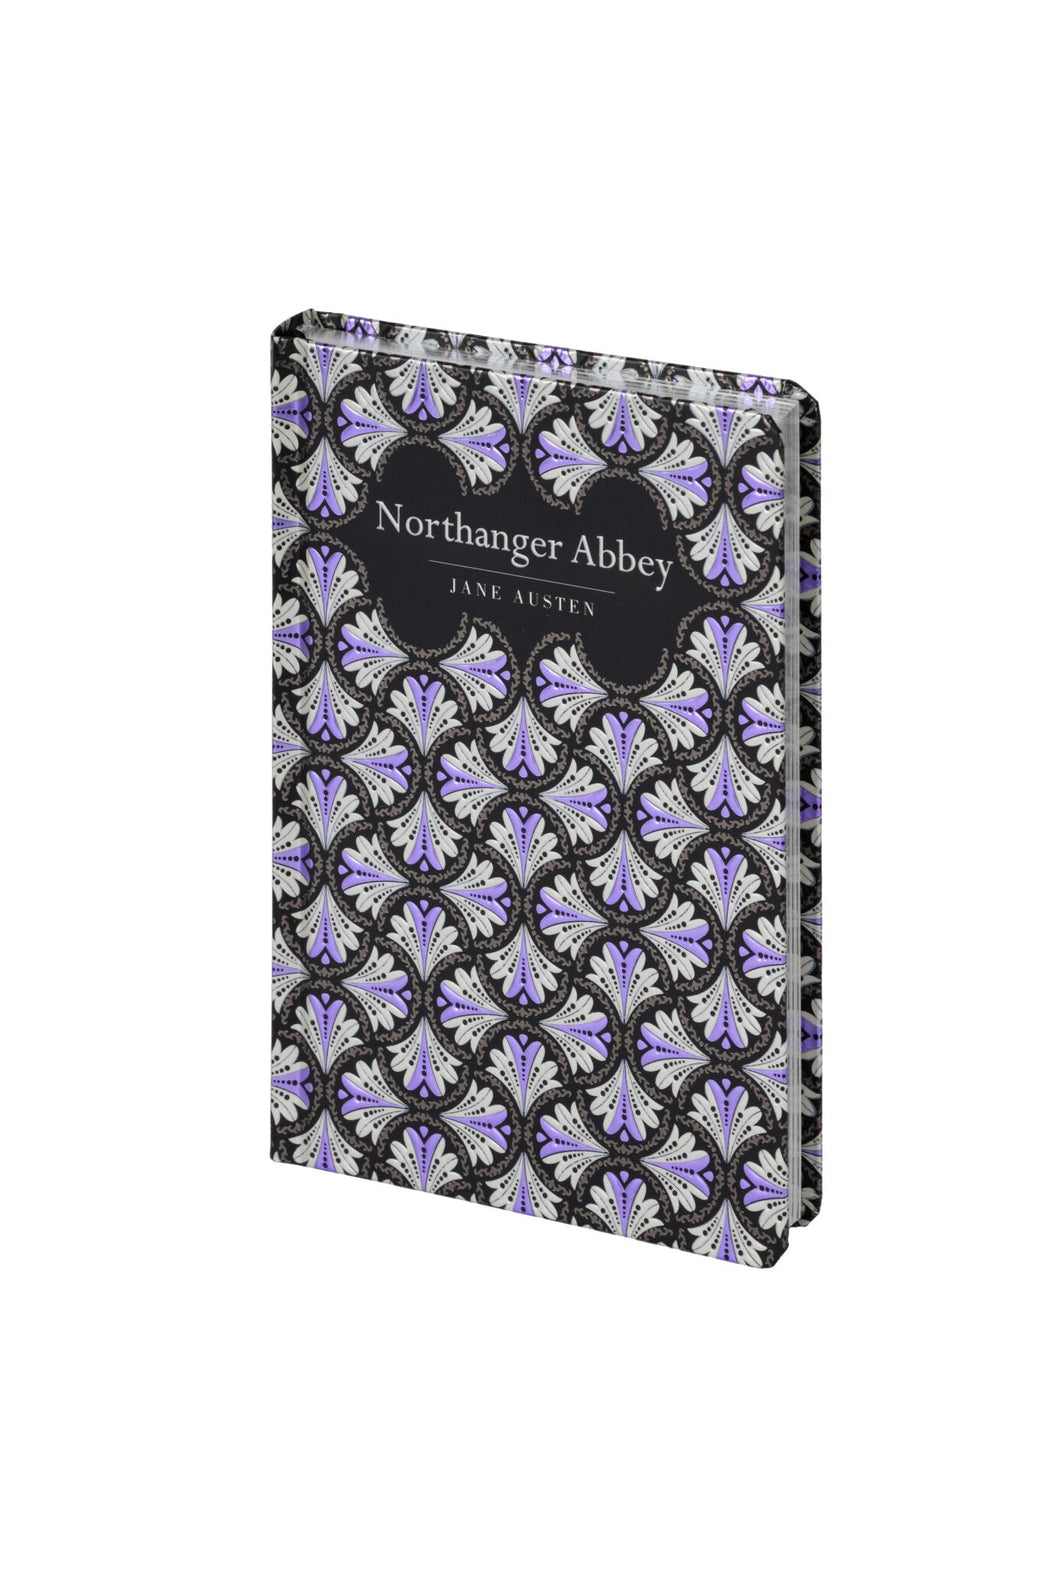 Northanger Abbey, Jane Austen (Chiltern Classics)